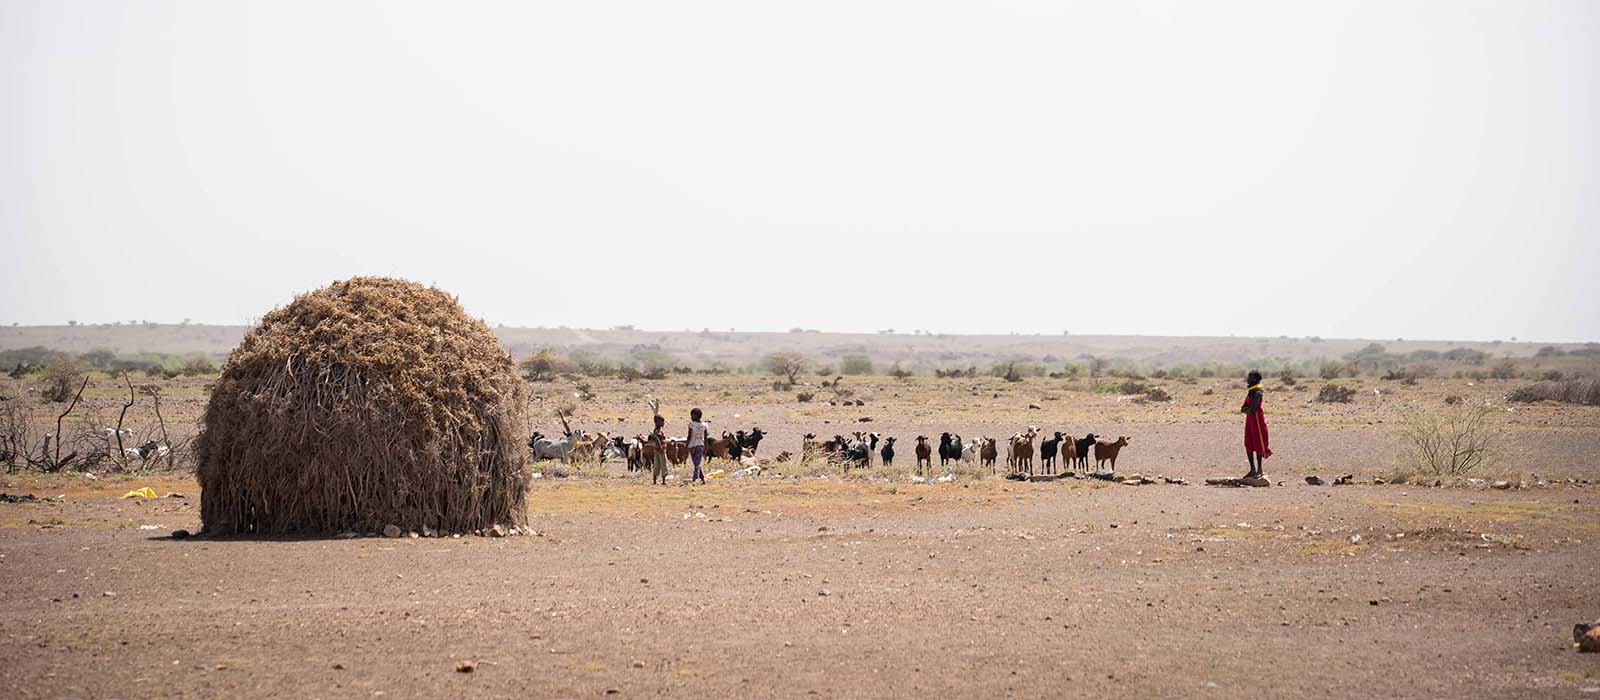 A pastoralist home with livestock in Turkana Kenya